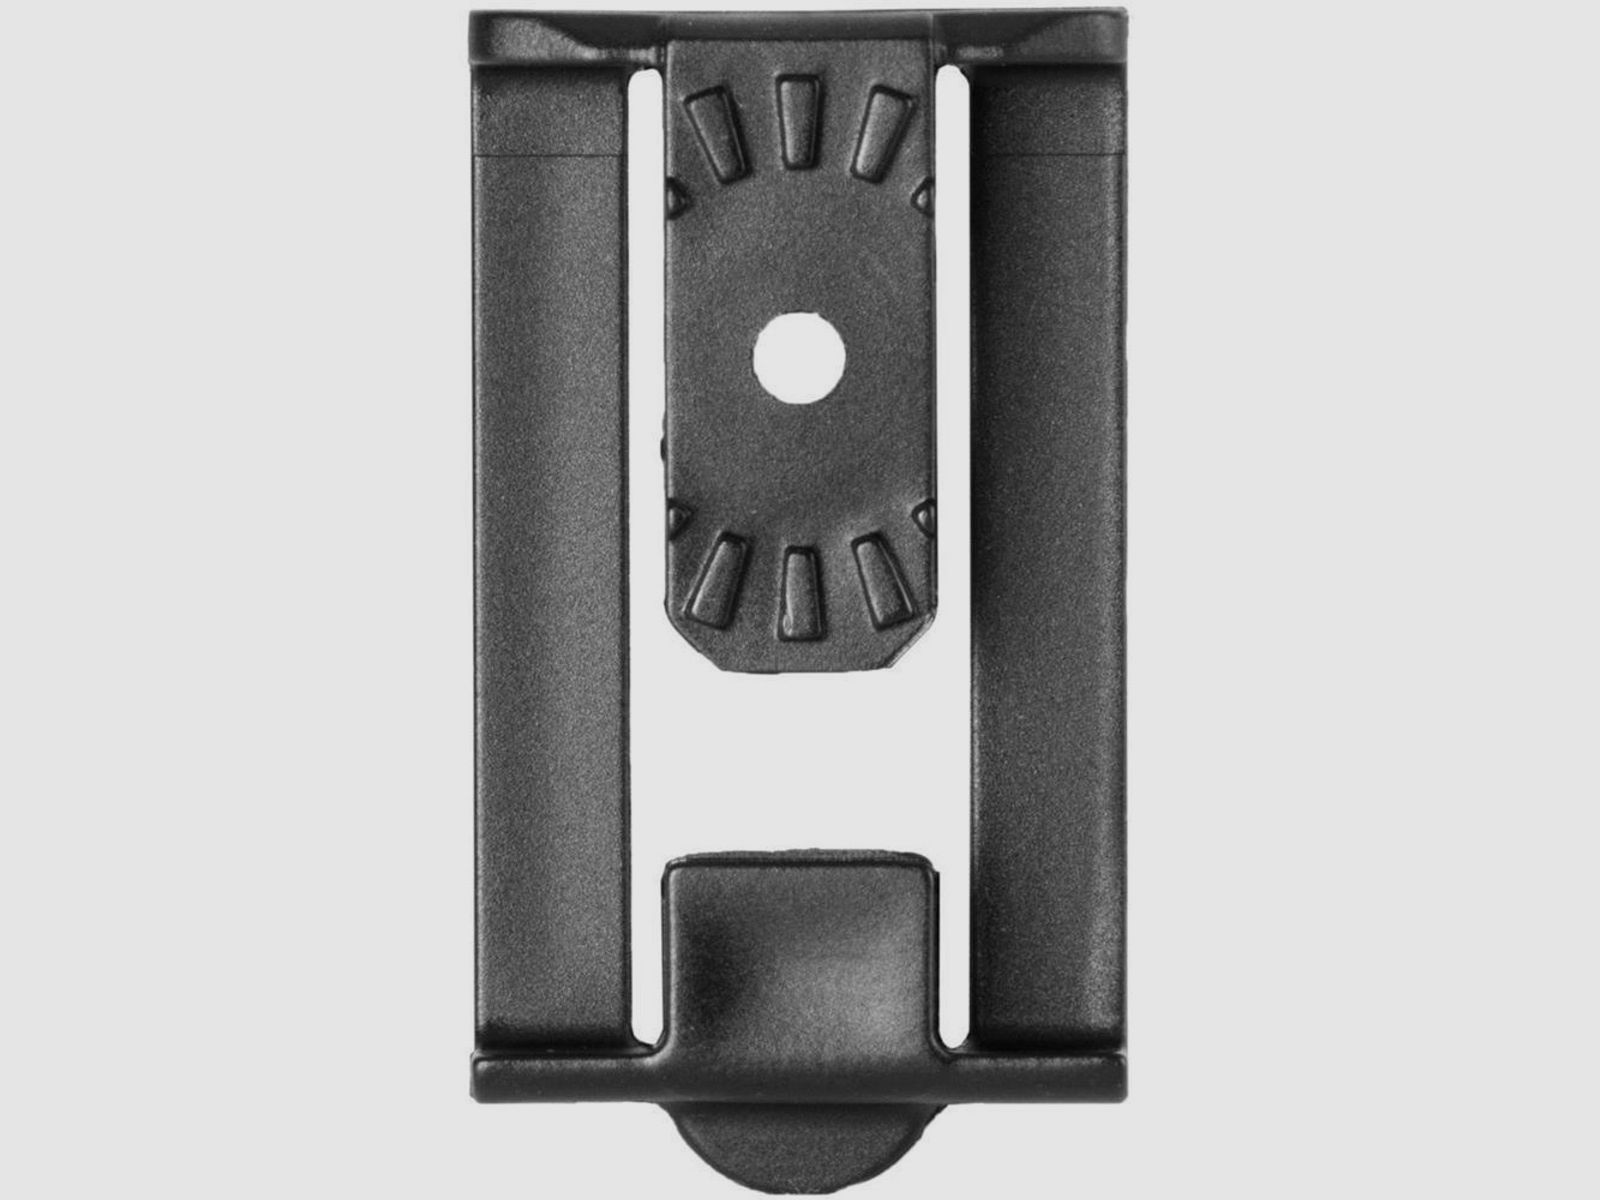 Mehrzweck-Holster HYBRID Glock 43